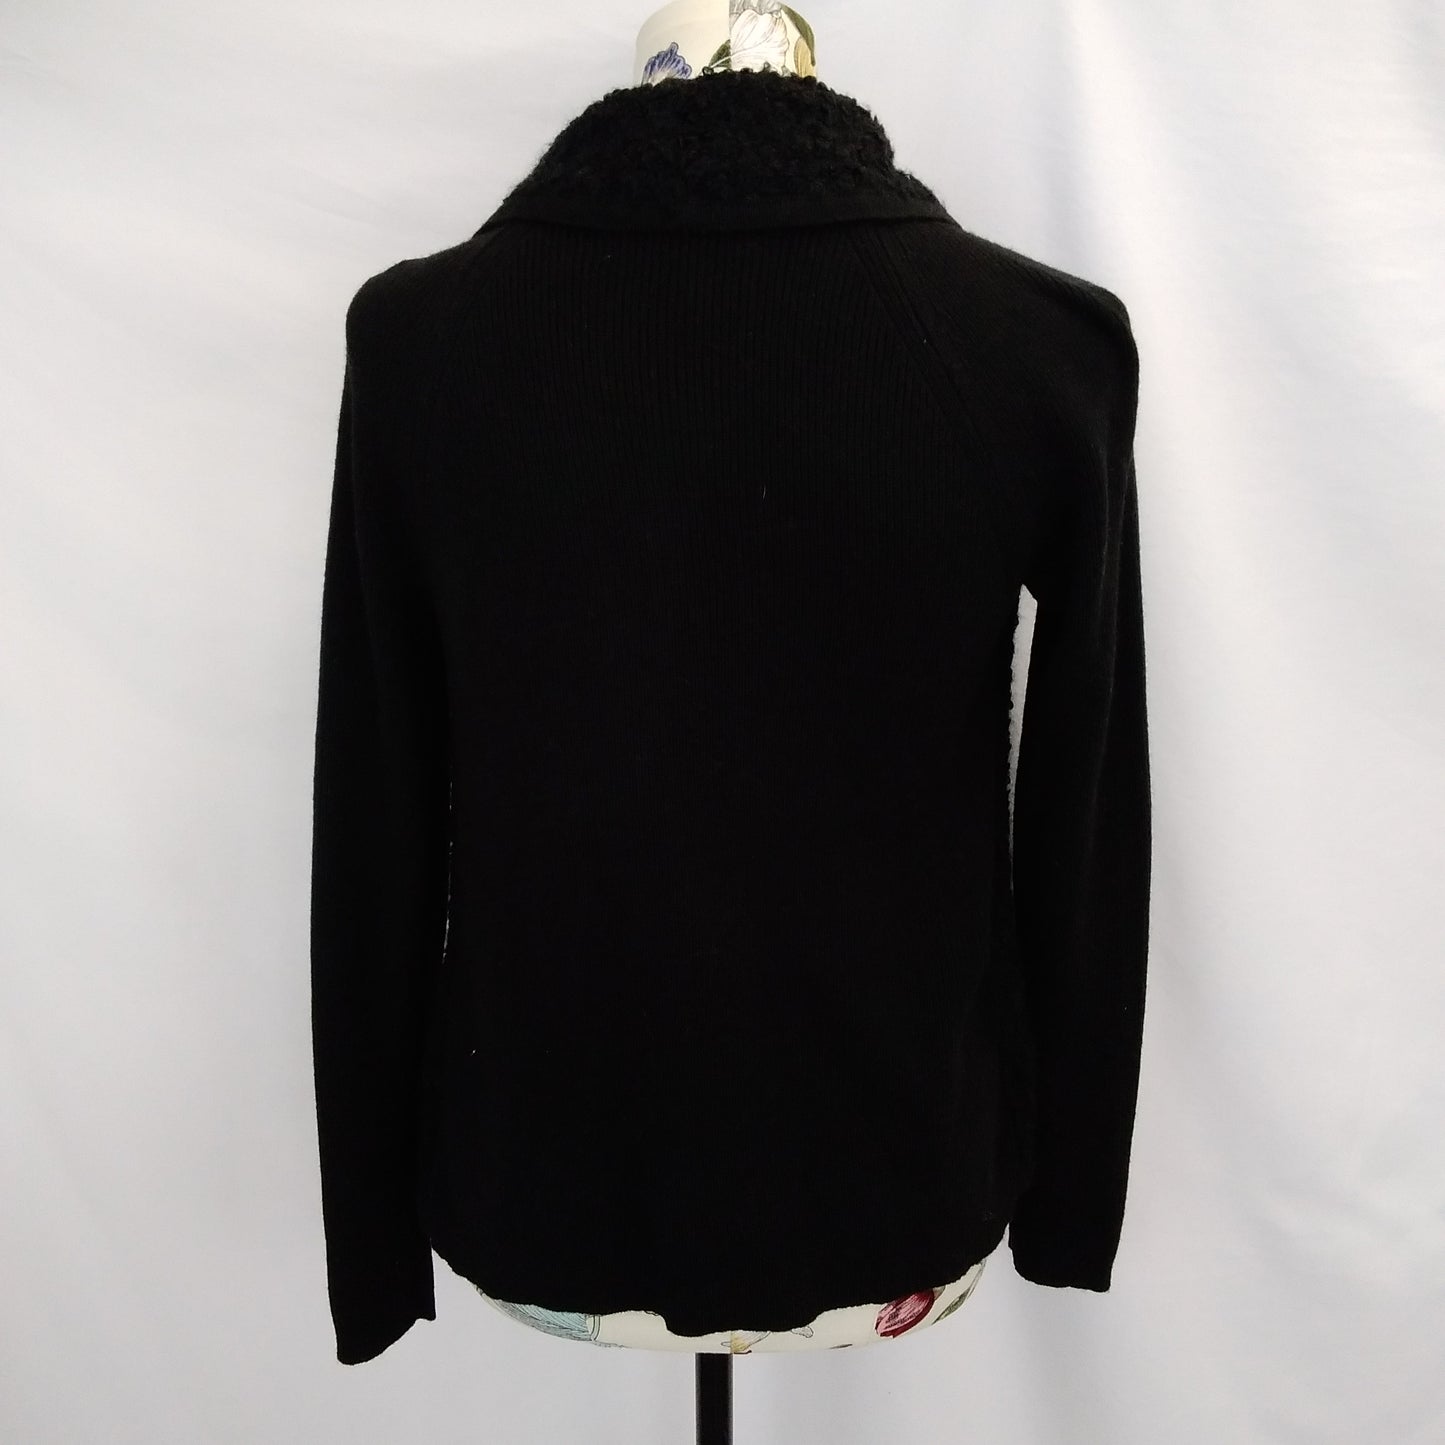 NWT - Loft Women's Black Open Front Cardigan Sweater - Size: XS